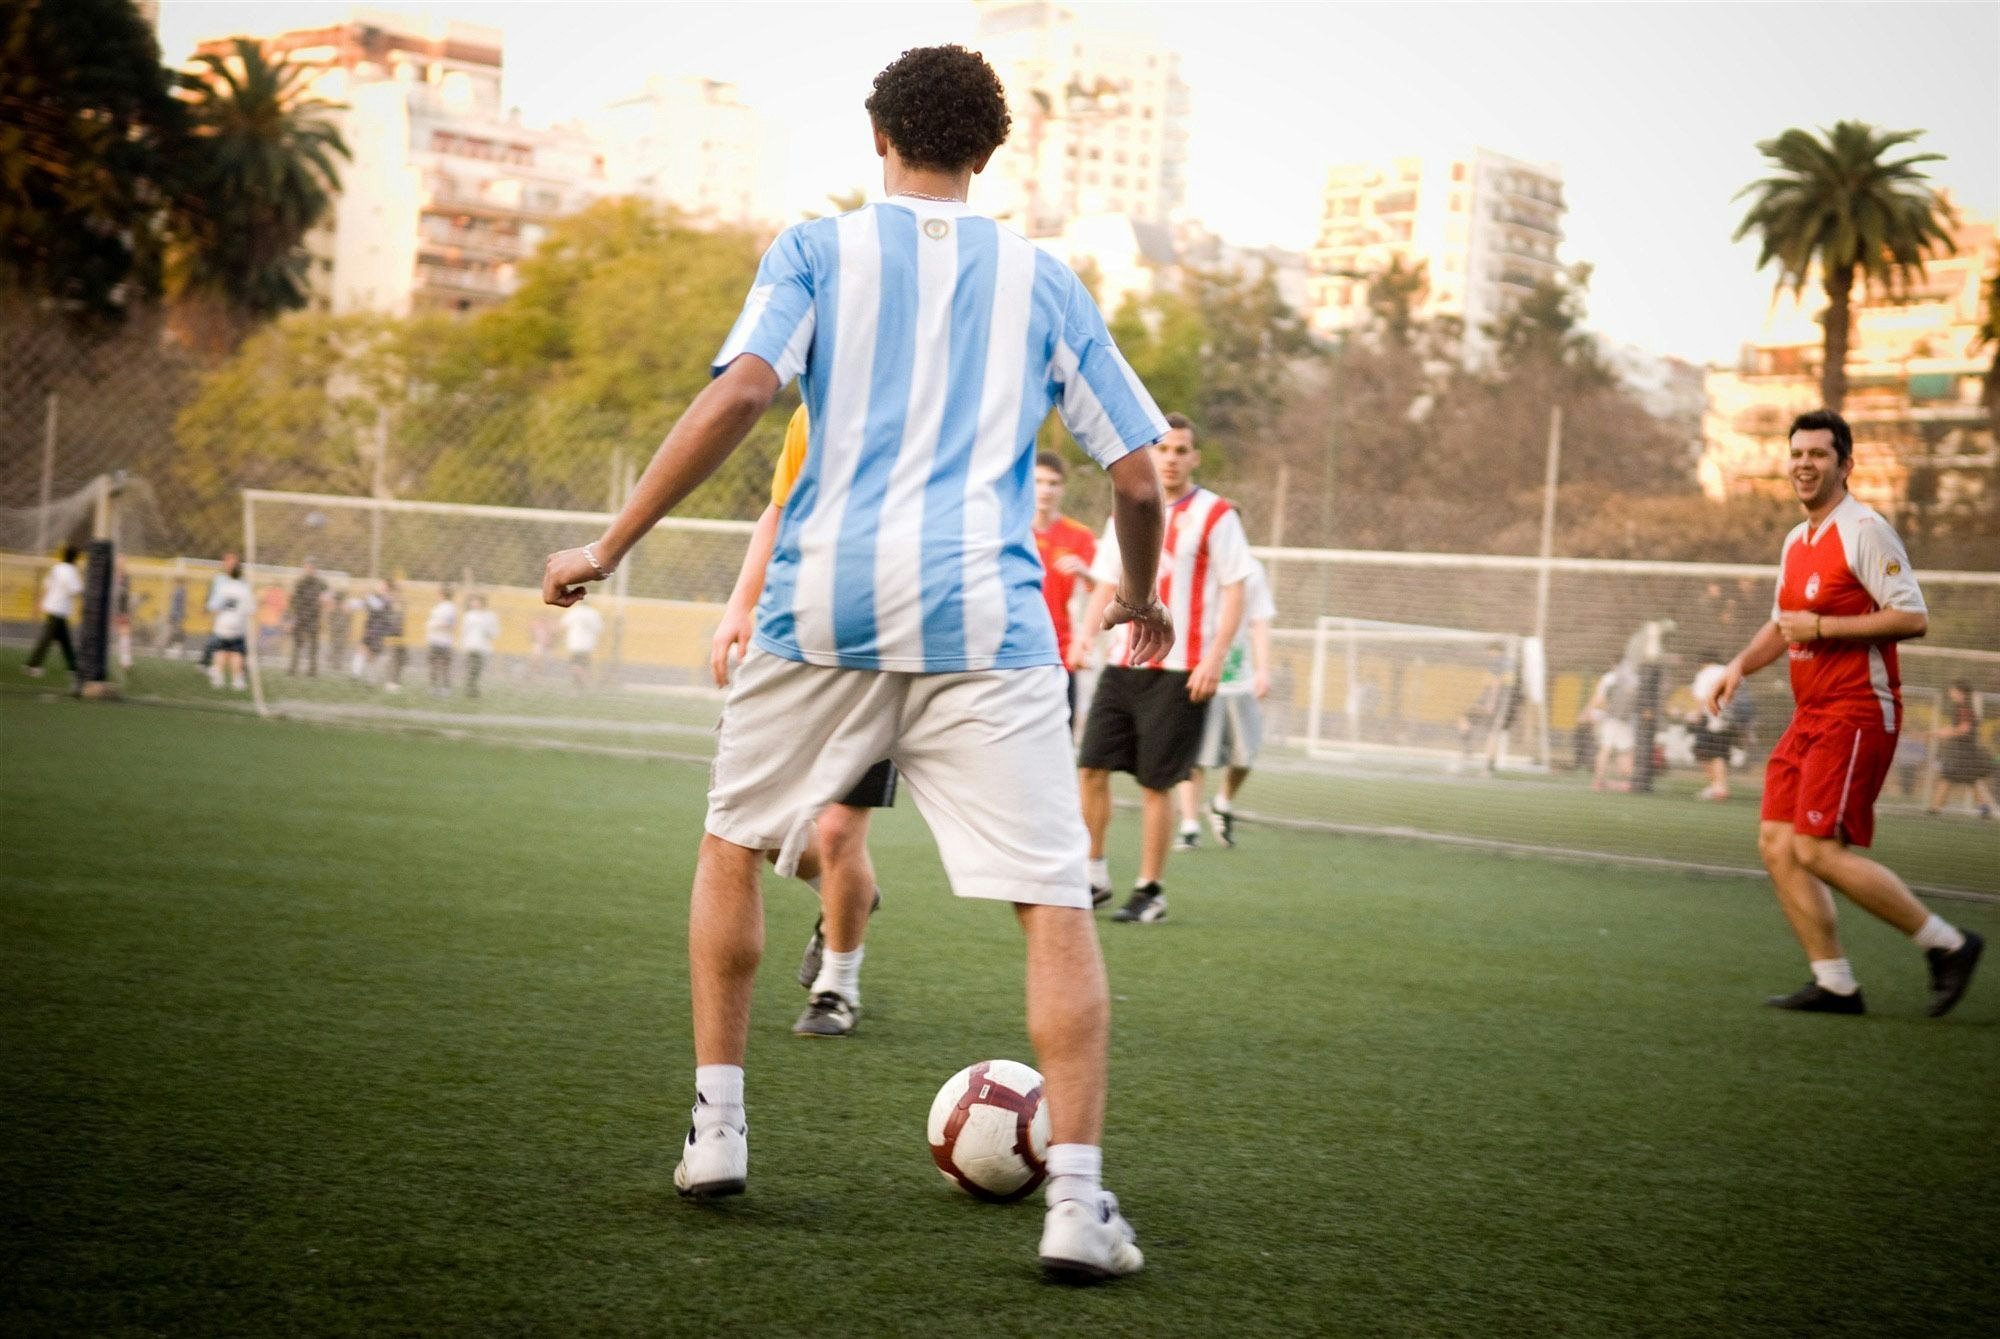 Expanish Spanish School Buenos Aires Football Activity.jpg